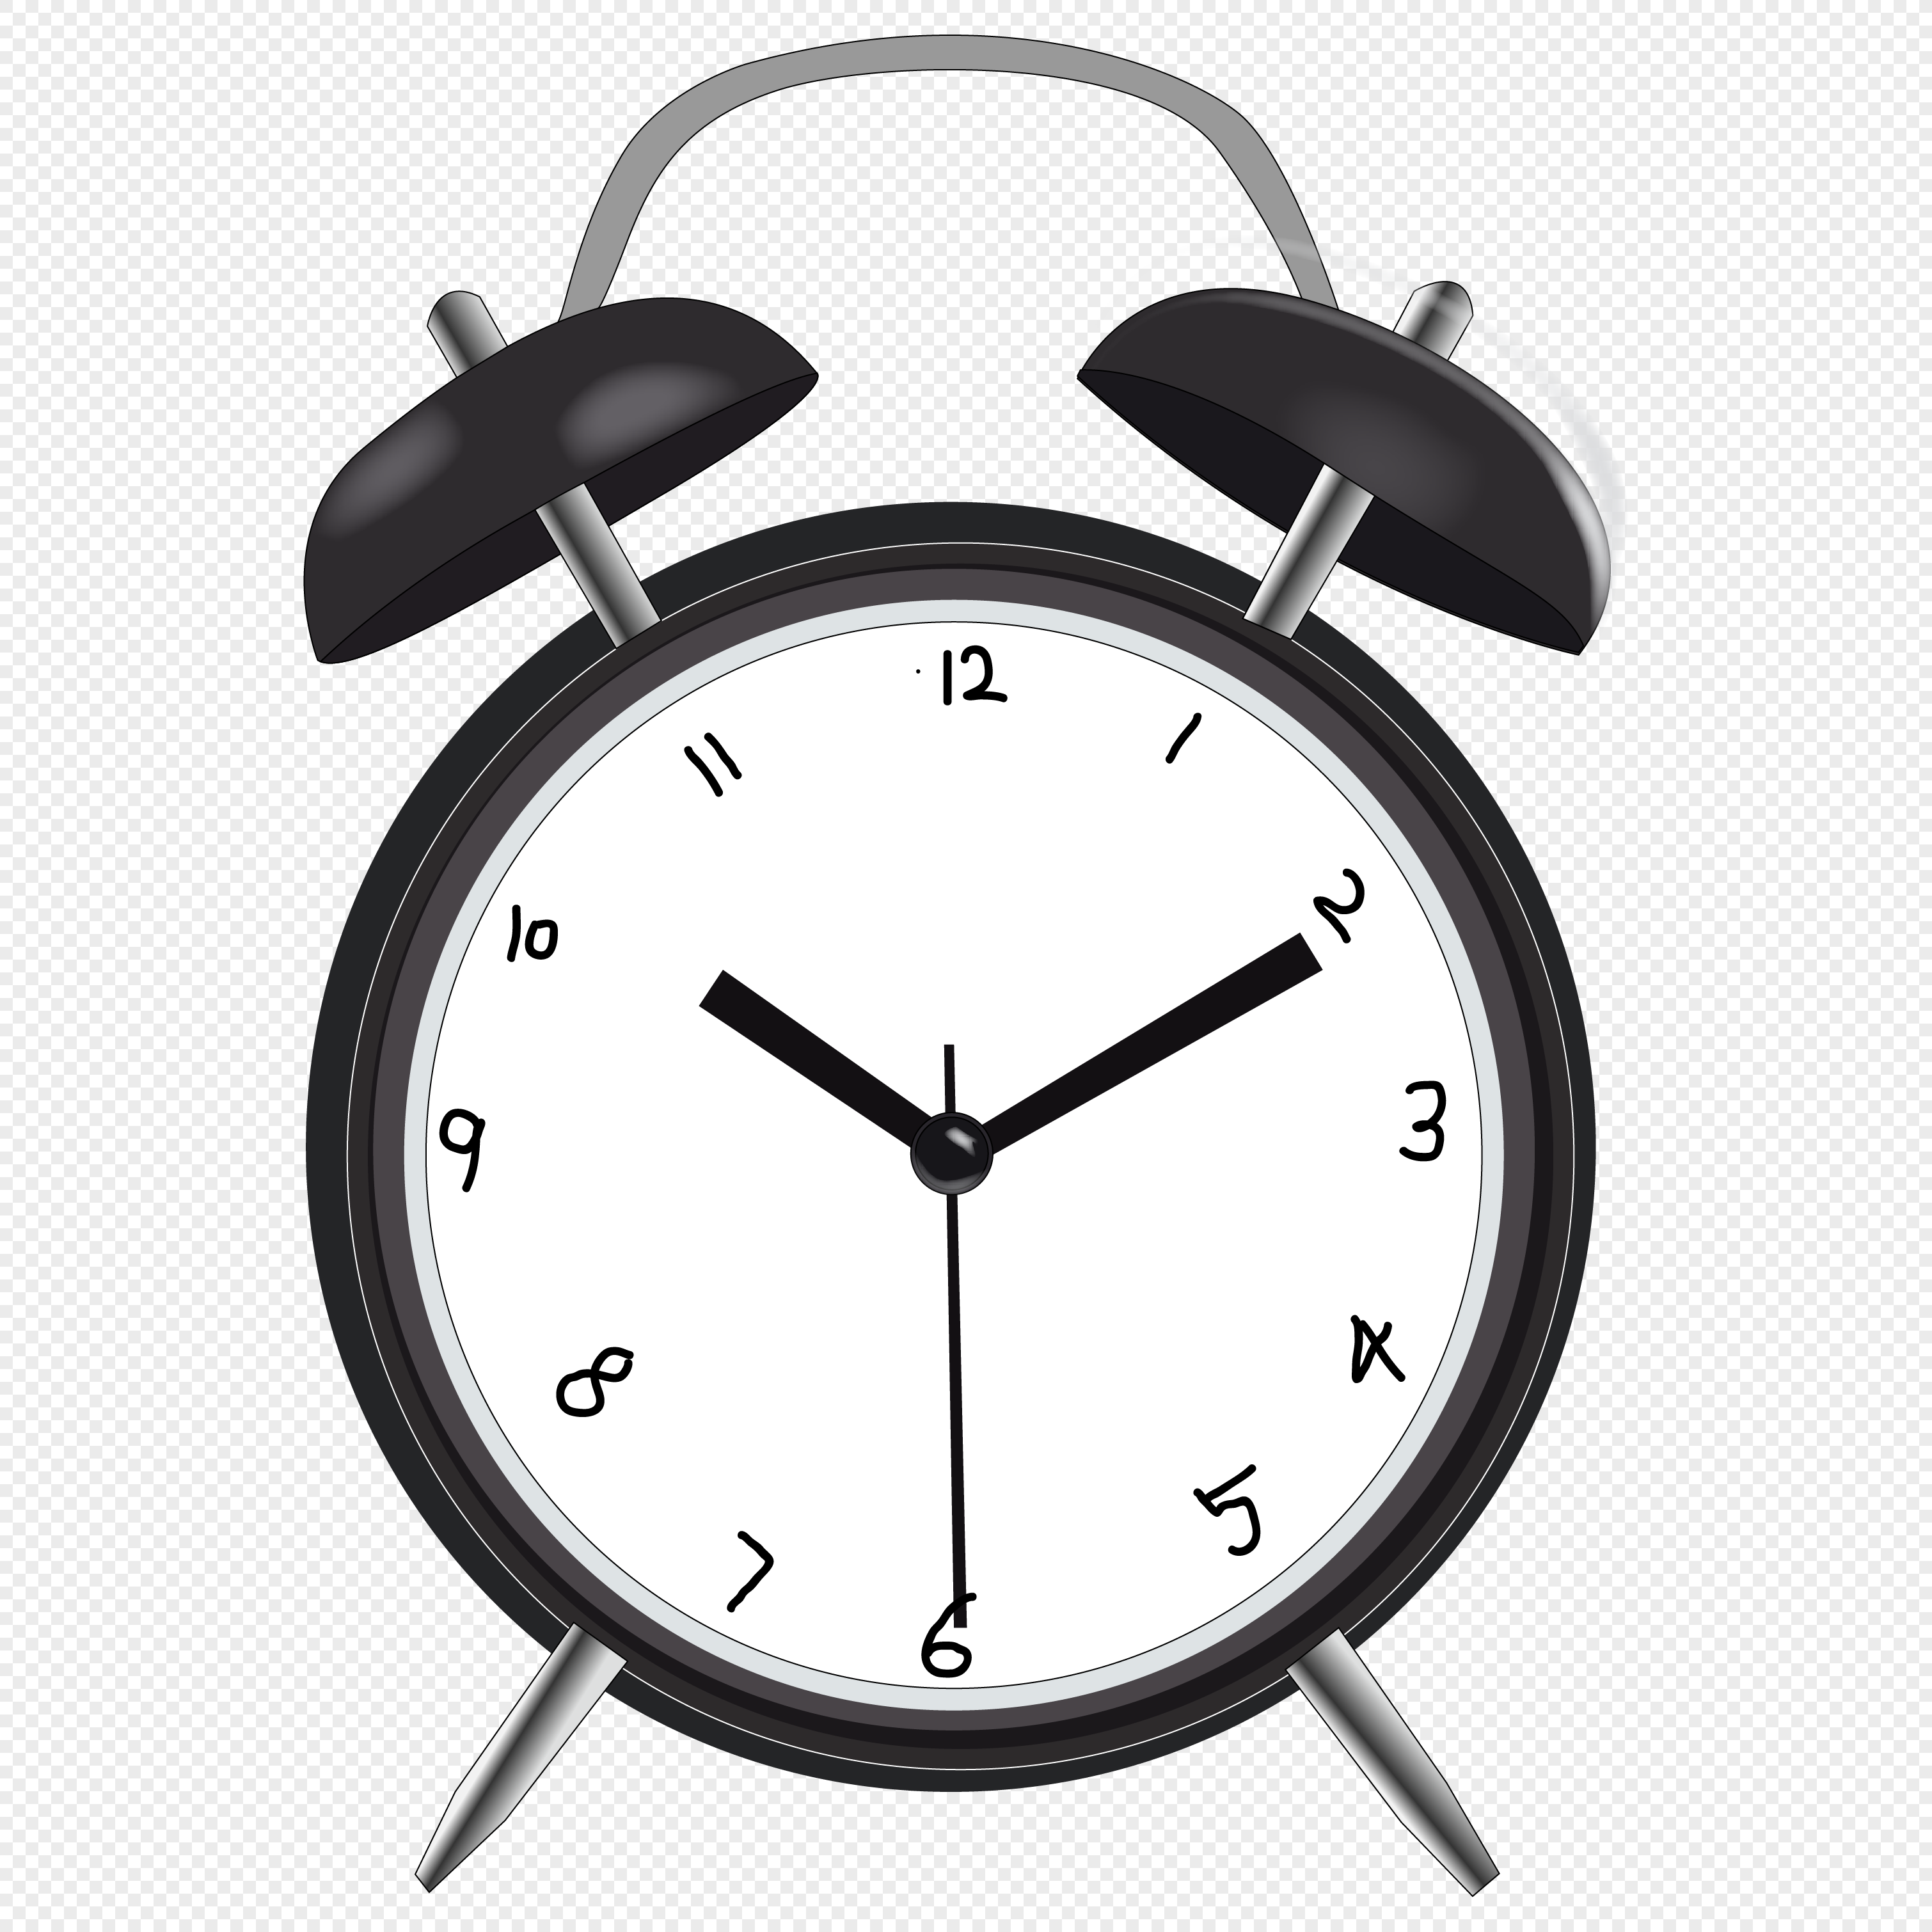 Alarm Clock Cartoon Image : Cartoon alarm clock stock vector